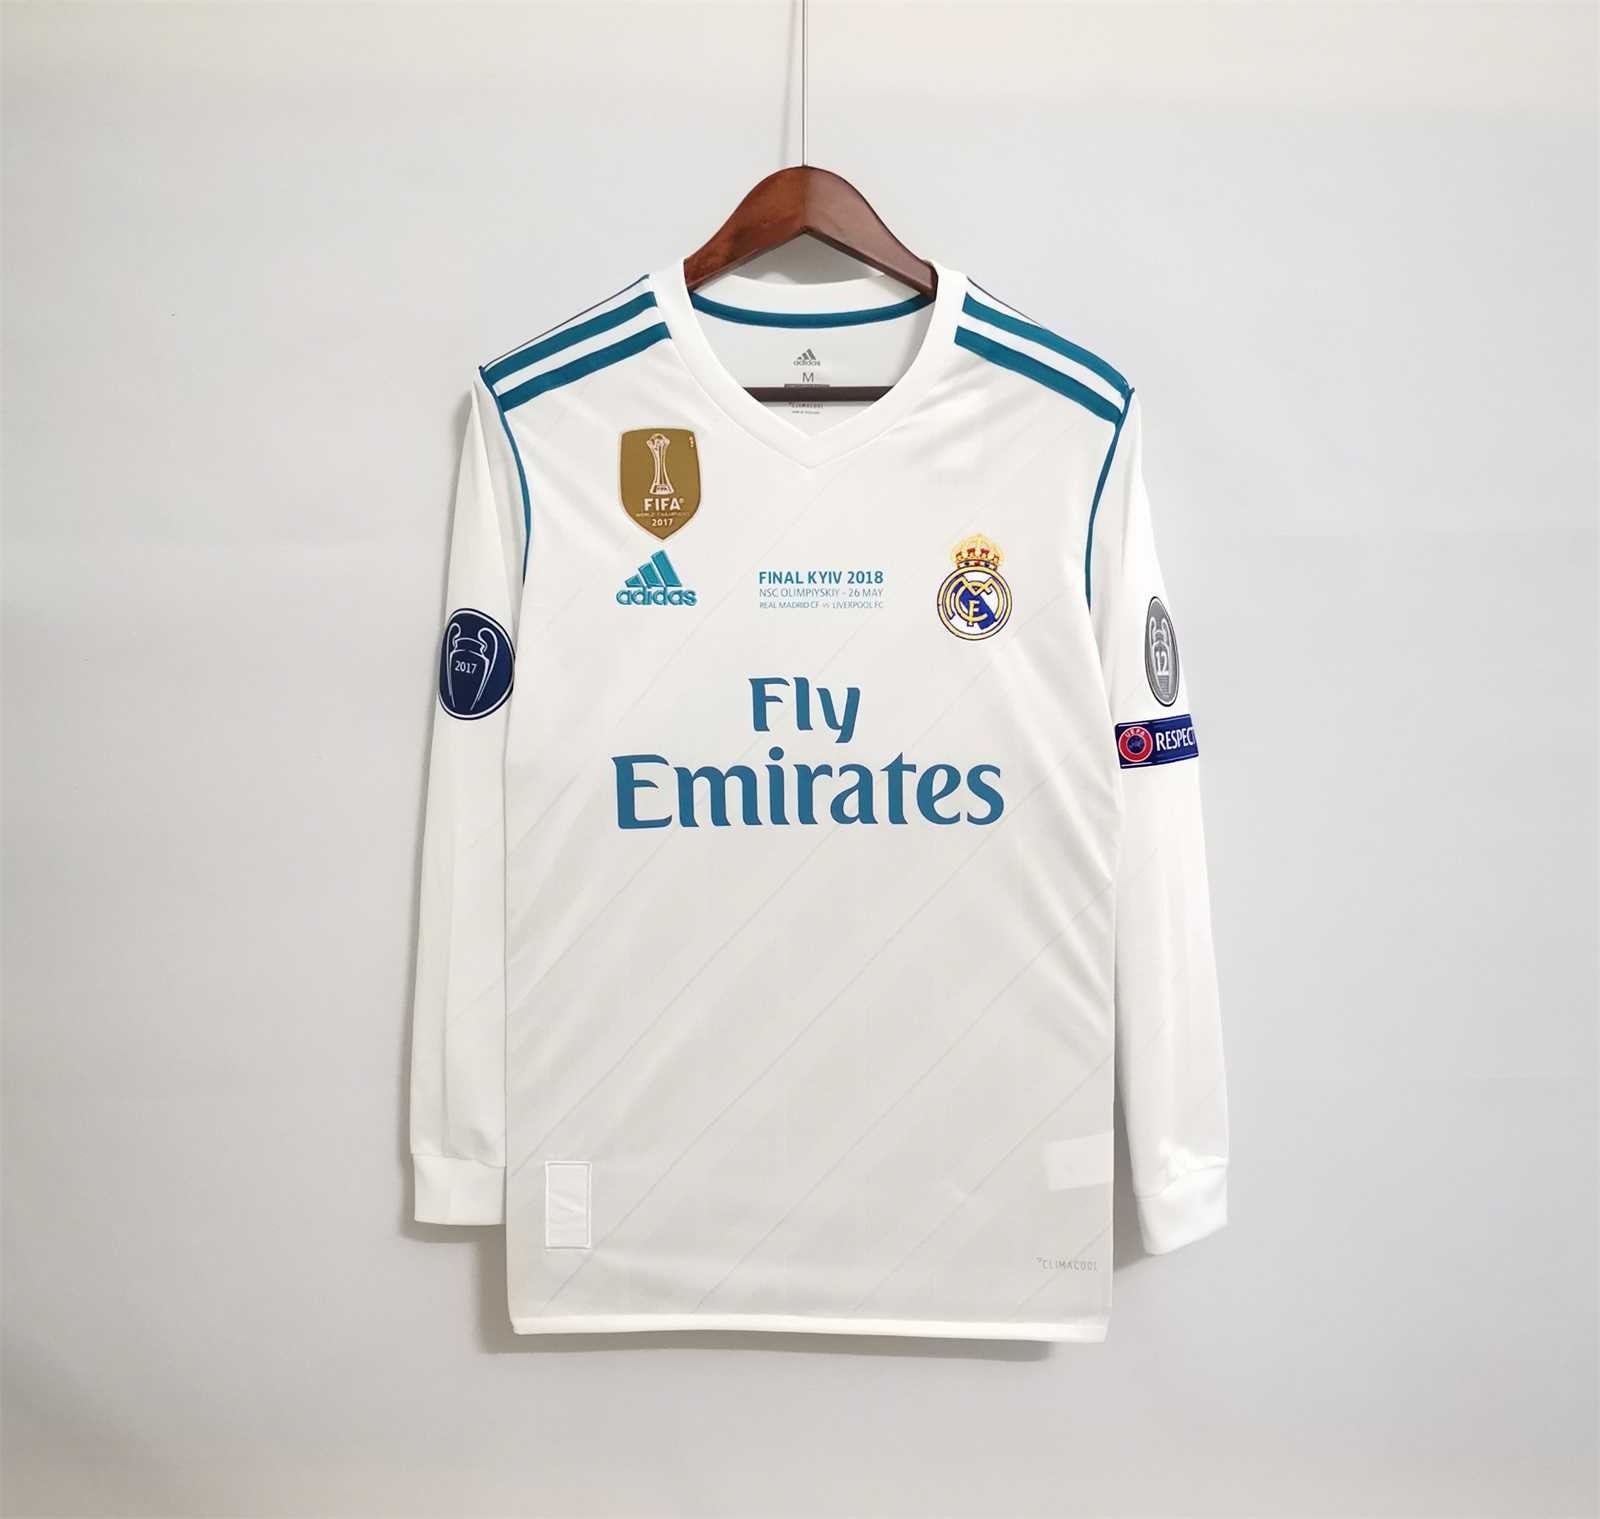 Fruitig Stereotype Mos Real Madrid RONALDO Long Sleeves Jersey Classic Shirt - Etsy